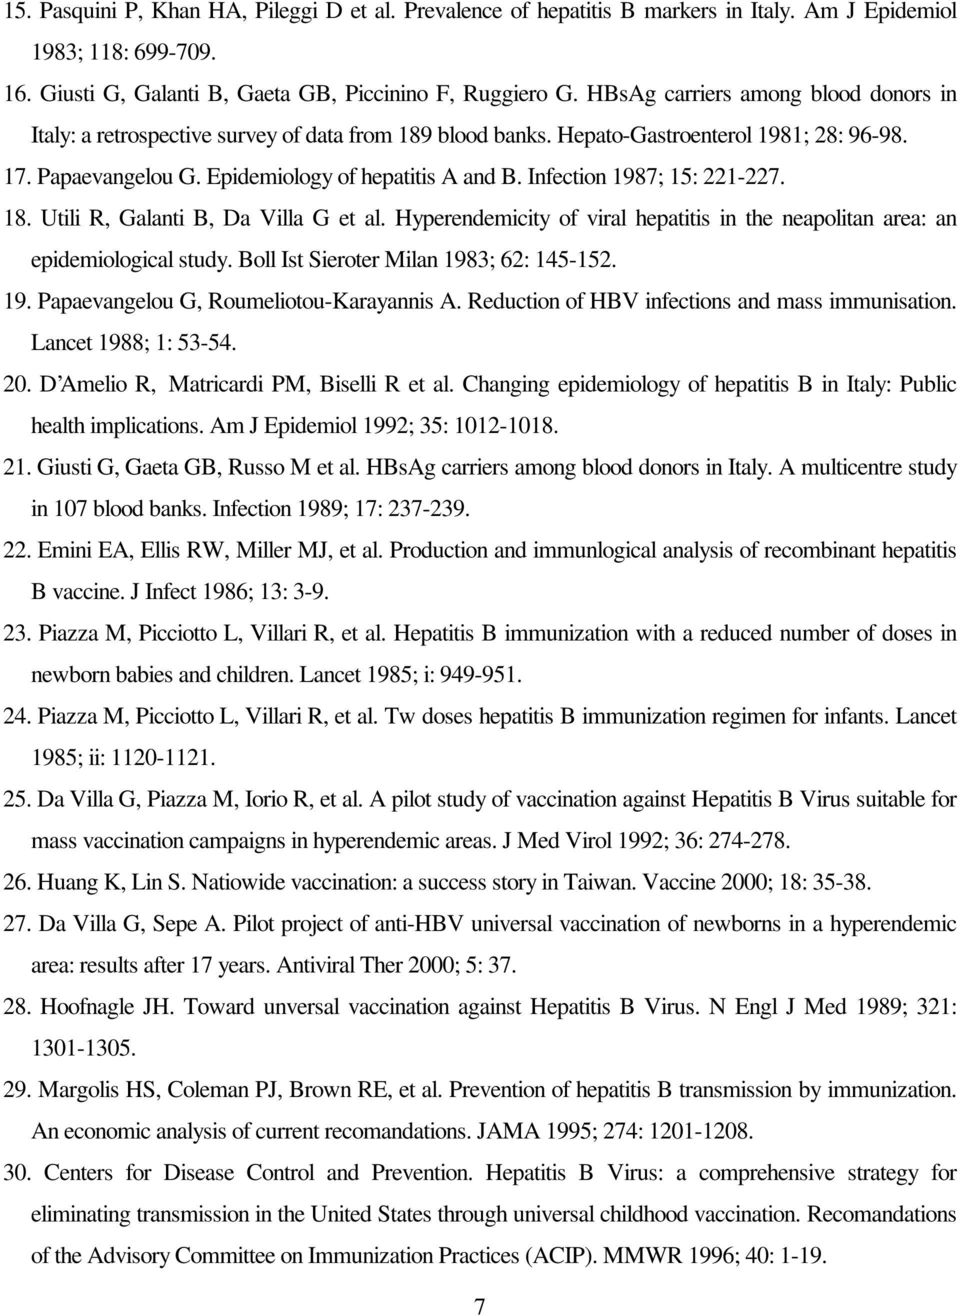 Infection 1987; 15: 221-227. 18. Utili R, Galanti B, Da Villa G et al. Hyperendemicity of viral hepatitis in the neapolitan area: an epidemiological study. Boll Ist Sieroter Milan 1983; 62: 145-152.